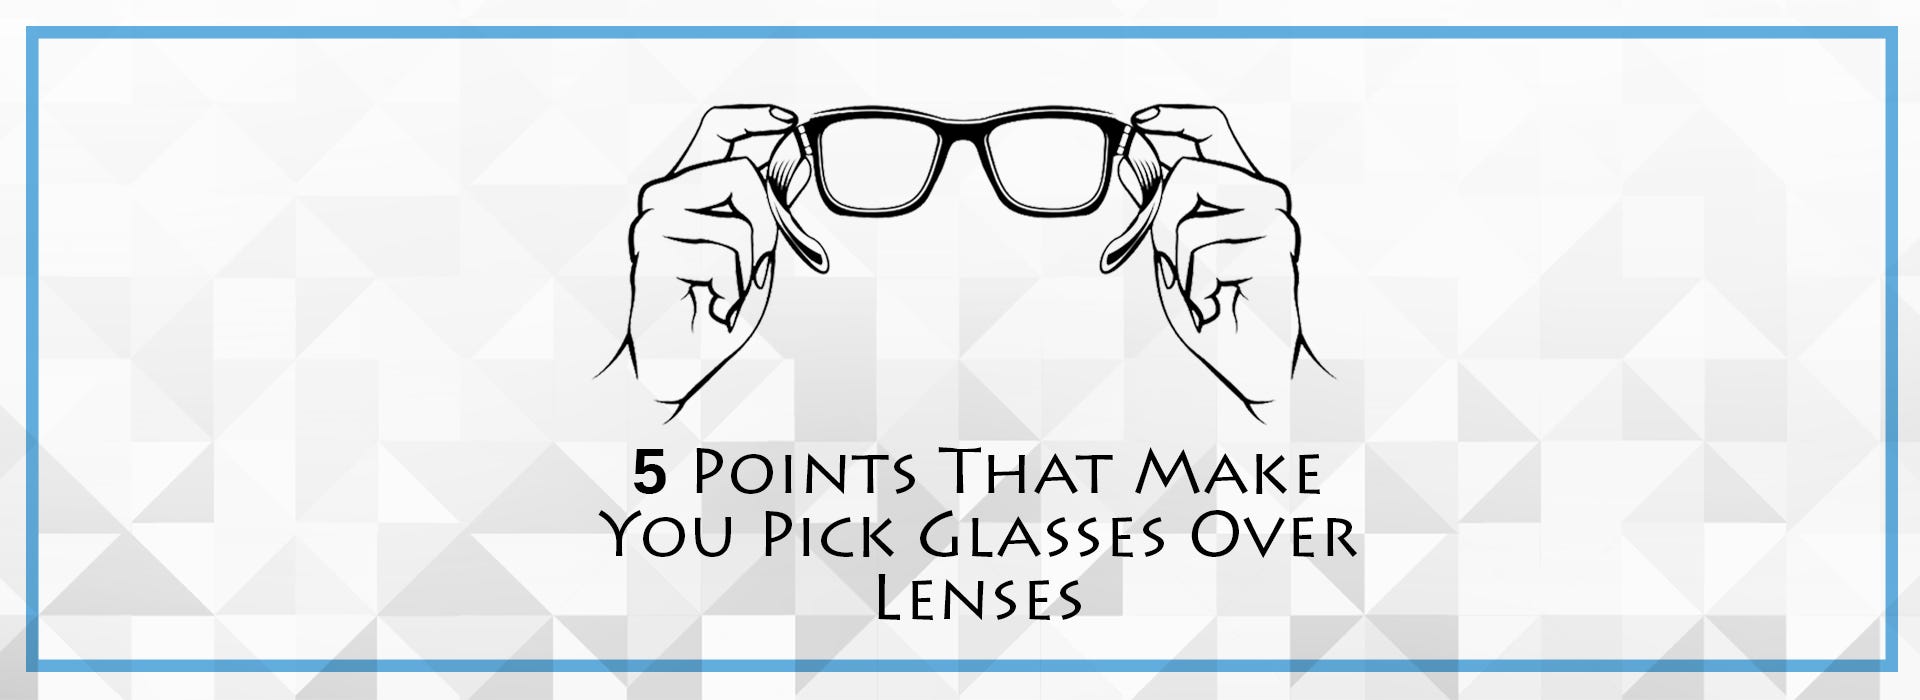 5 Points That Make You Pick Glasses Over Lenses